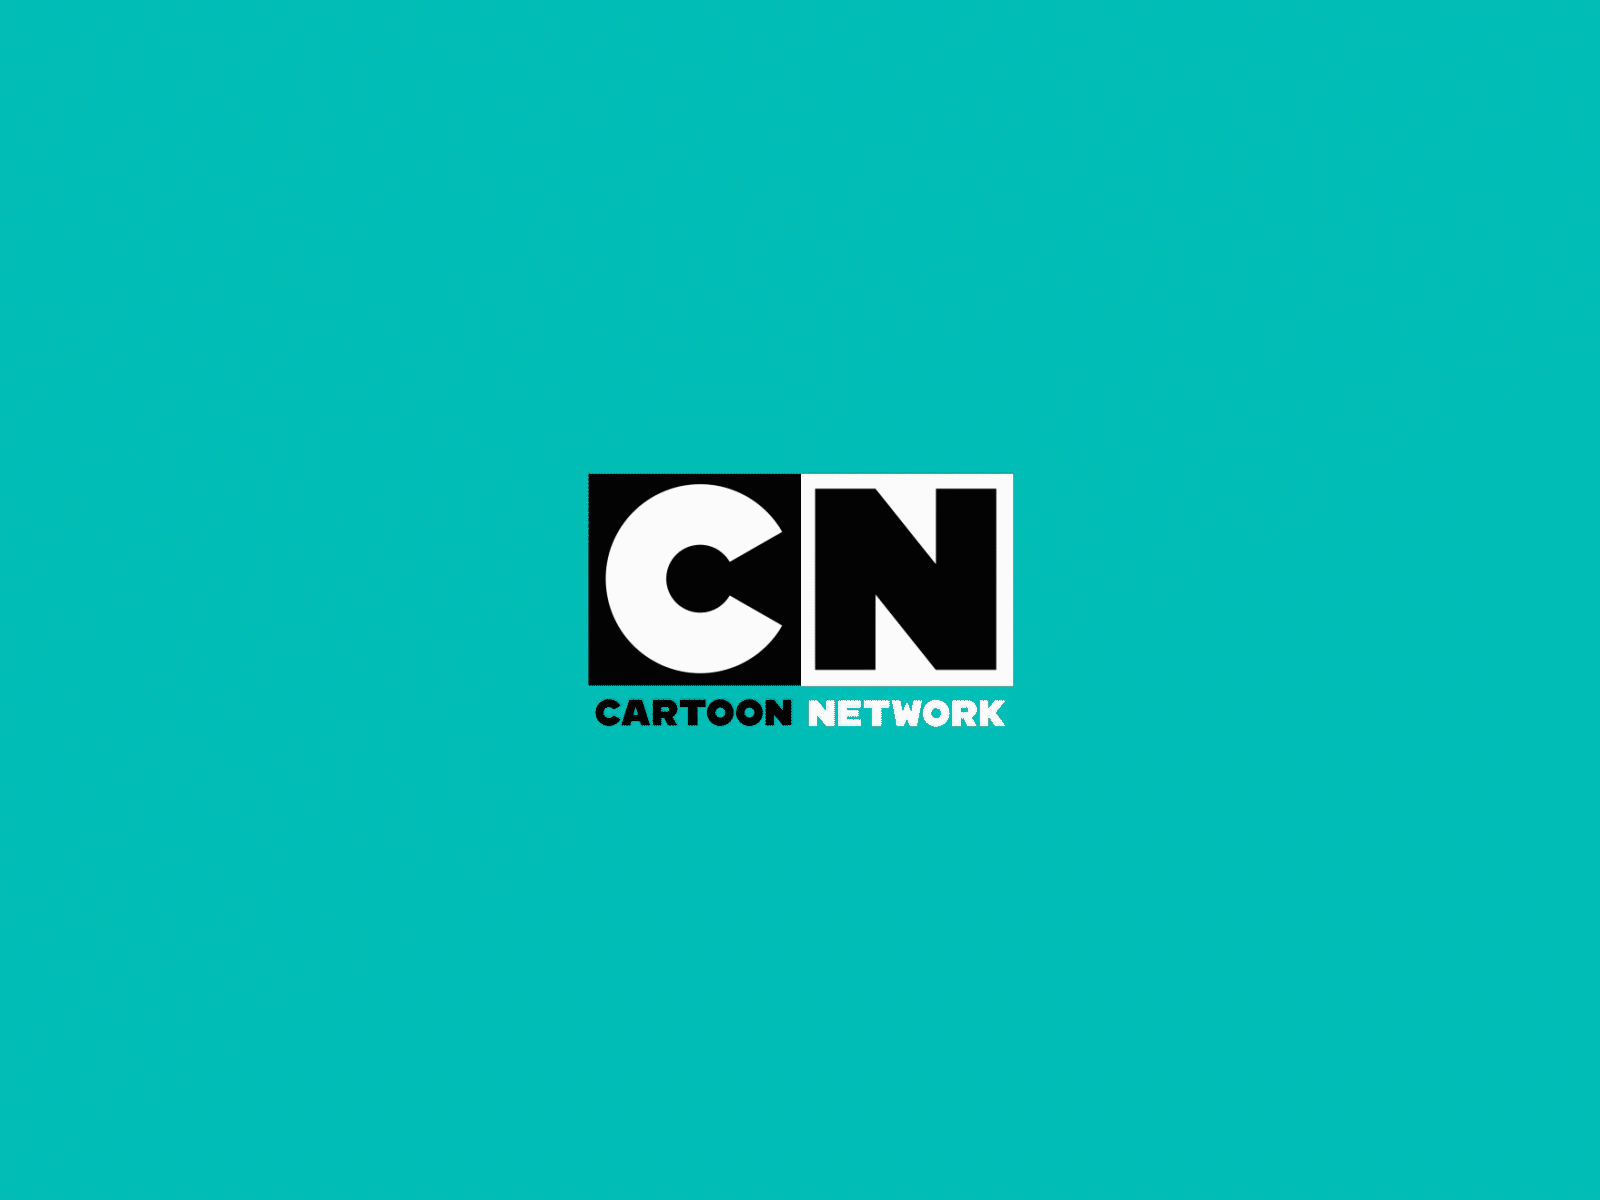 Cartoon Network Logo animation Version 1 by Hazik Maqsood on Dribbble